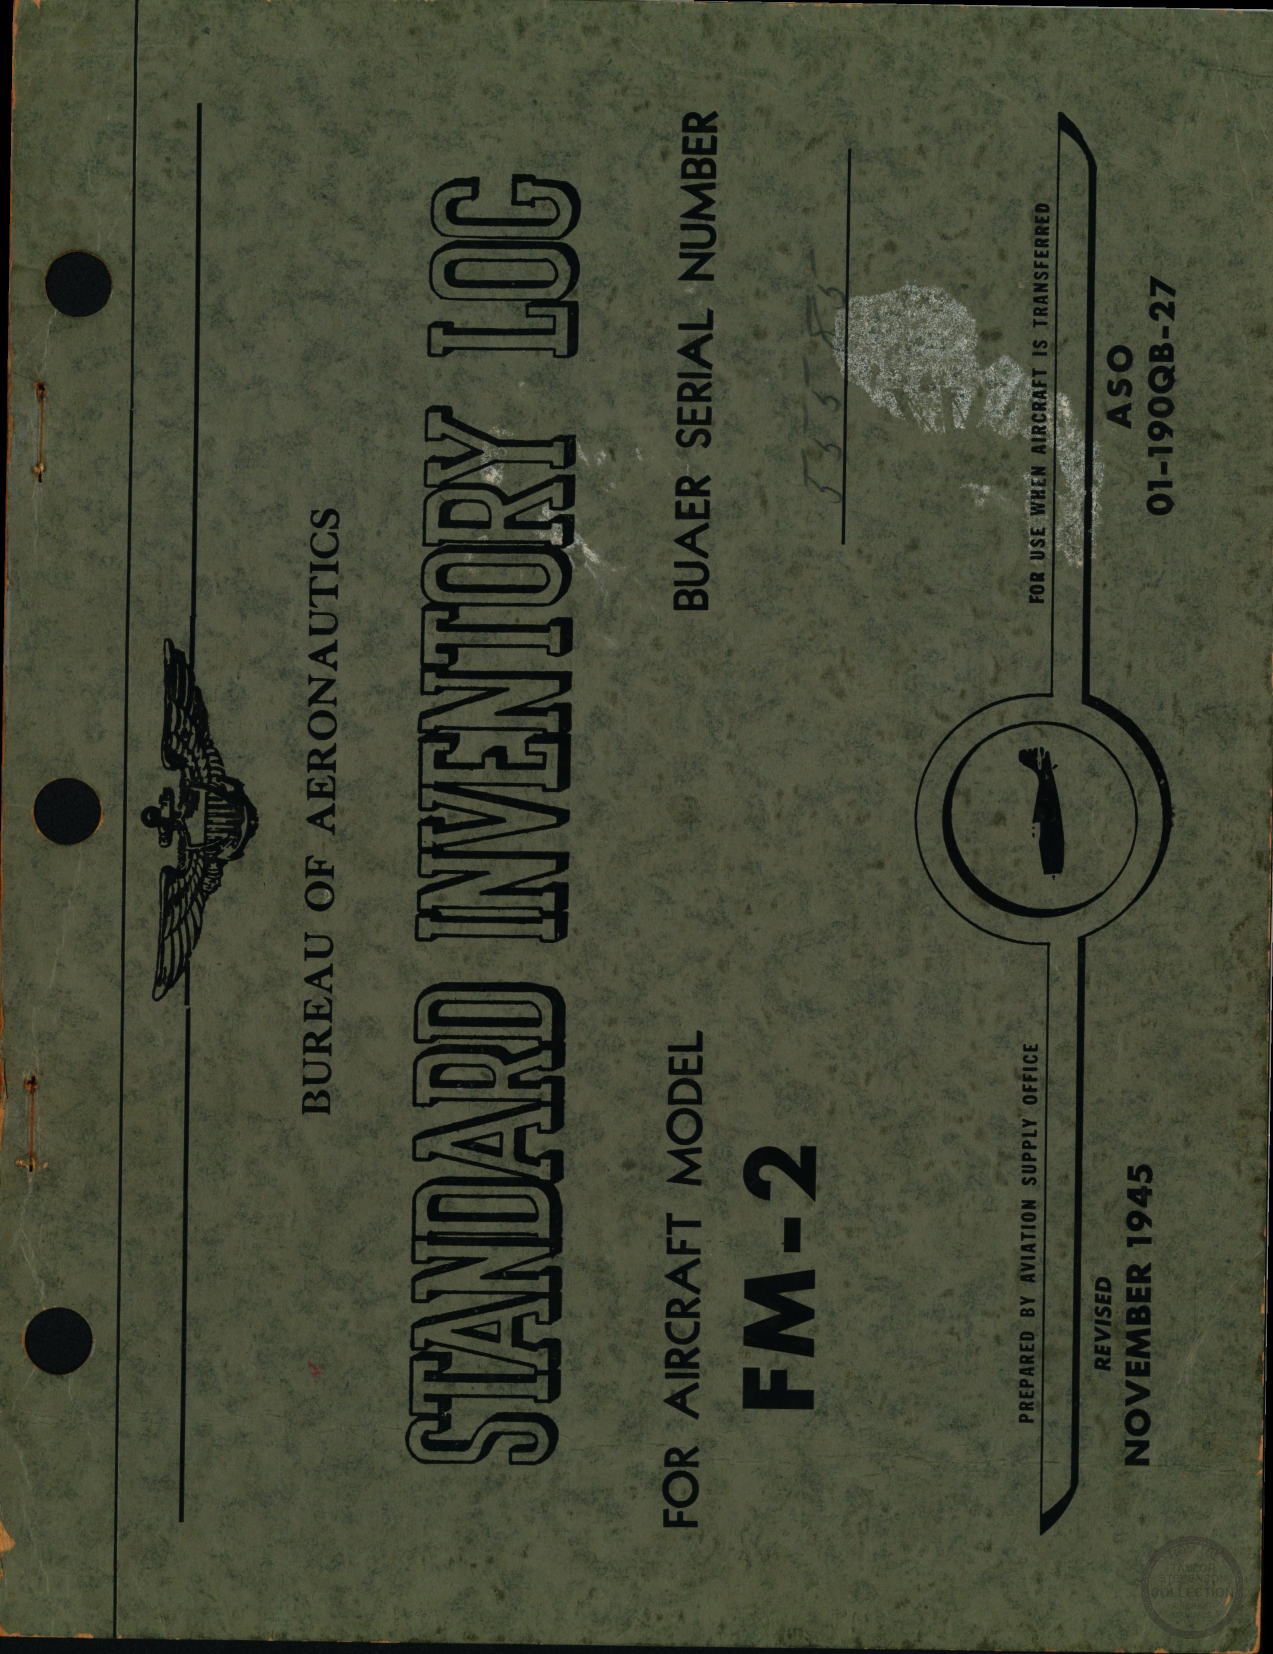 Sample page 1 from AirCorps Library document: Bureau of Aeronautics Standard Inventory Log set (2), FM-2 Wildcat